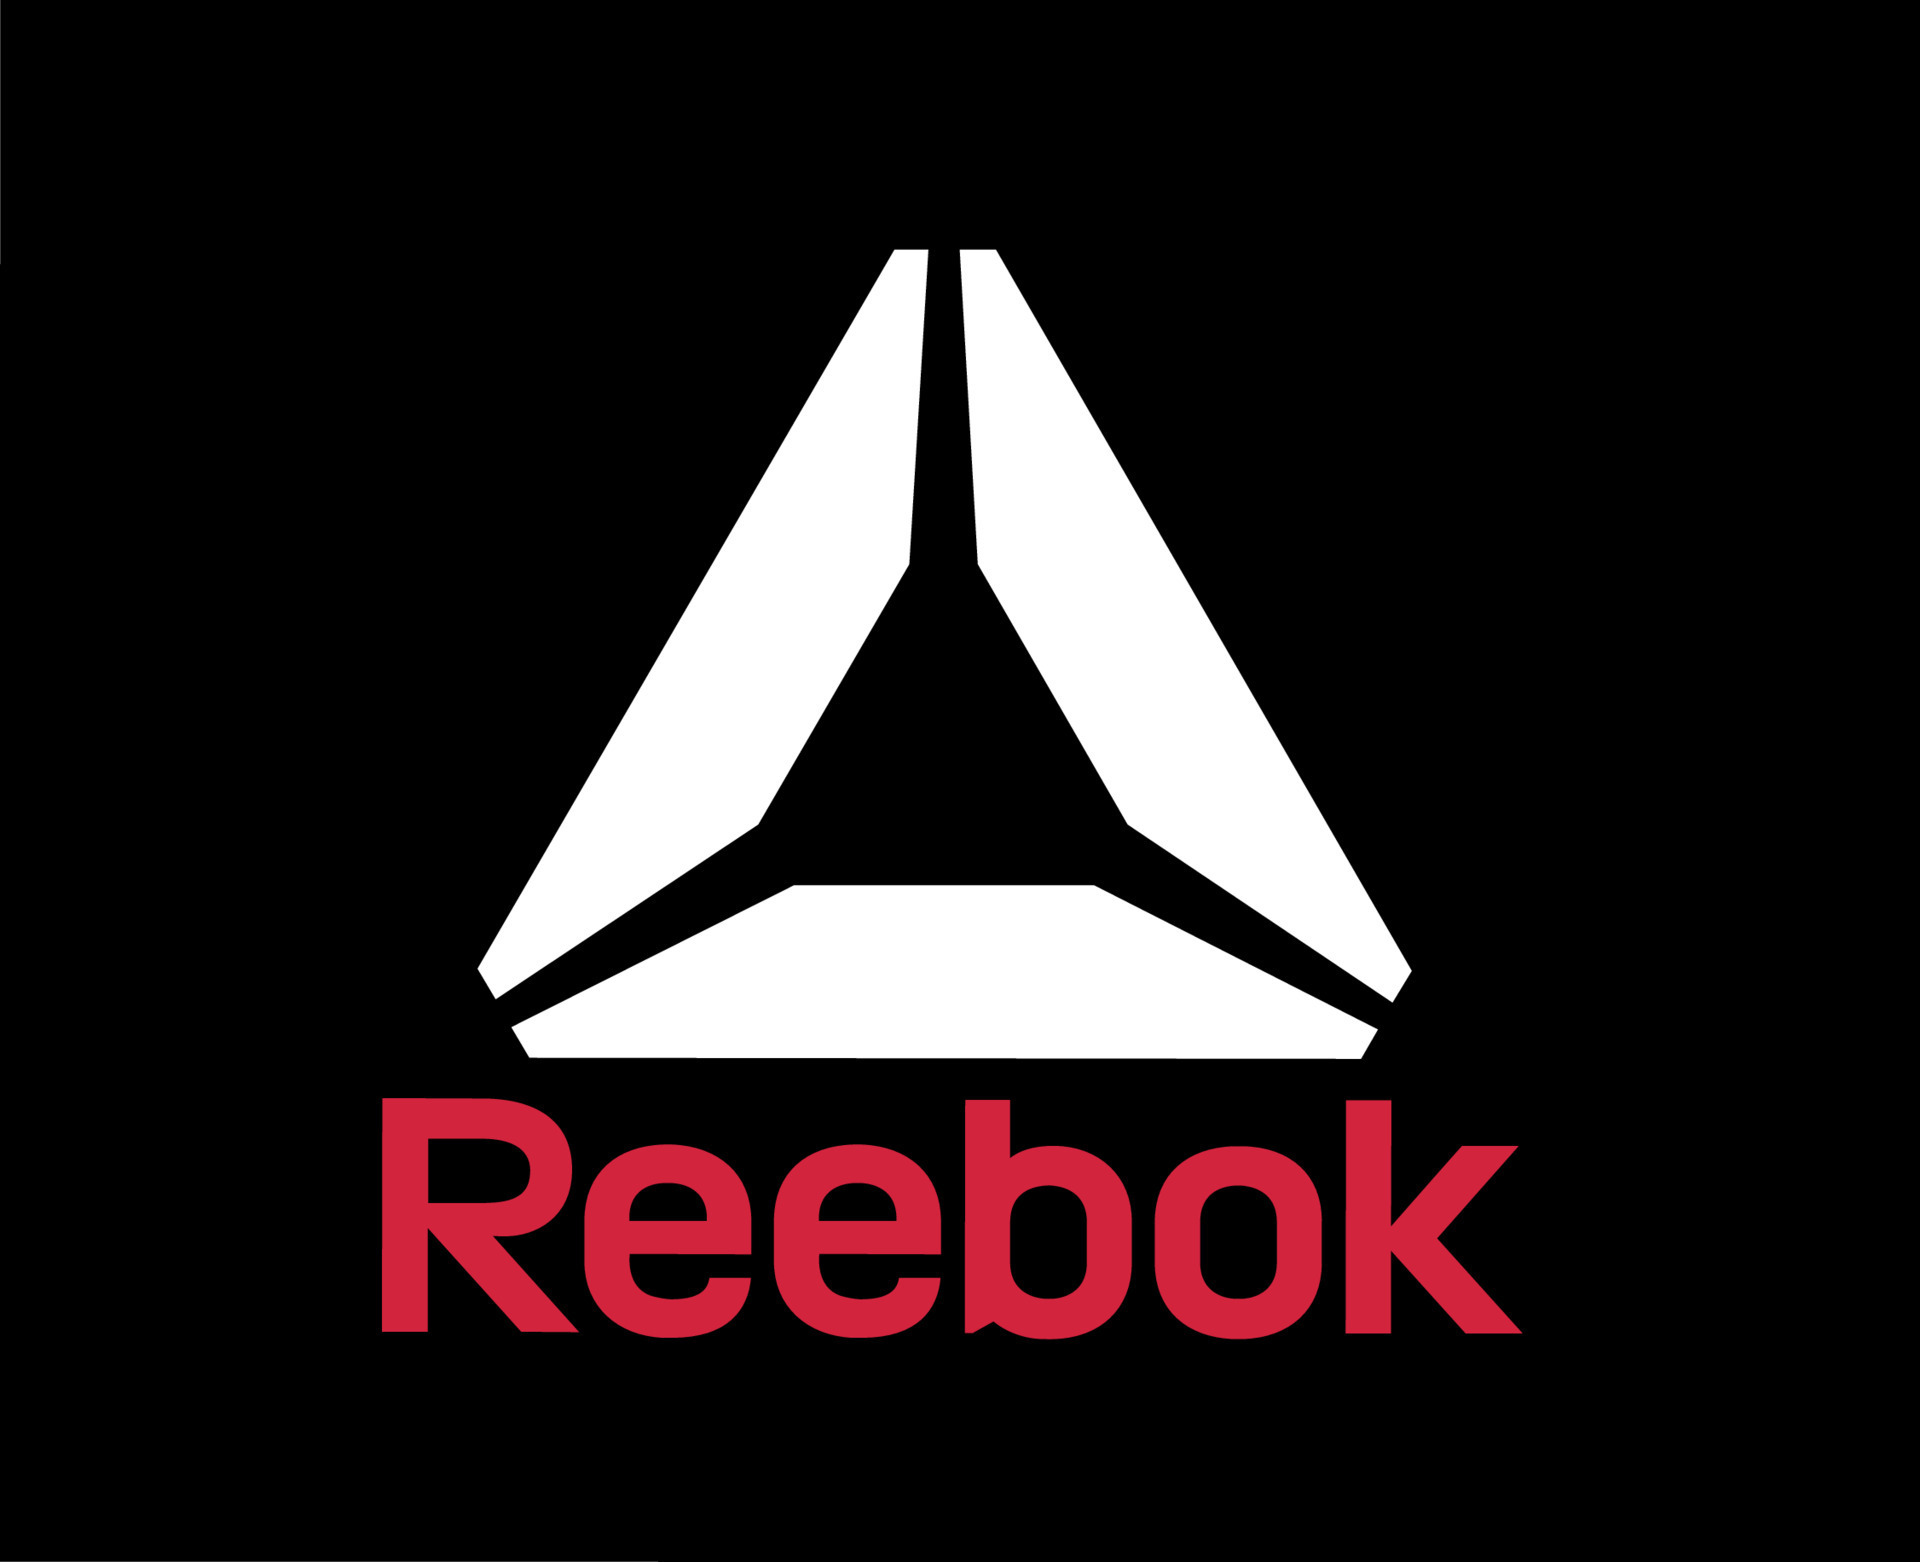 Reebok Brand Logo Symbol With Name Clothes Design Icon Abstract Vector ...